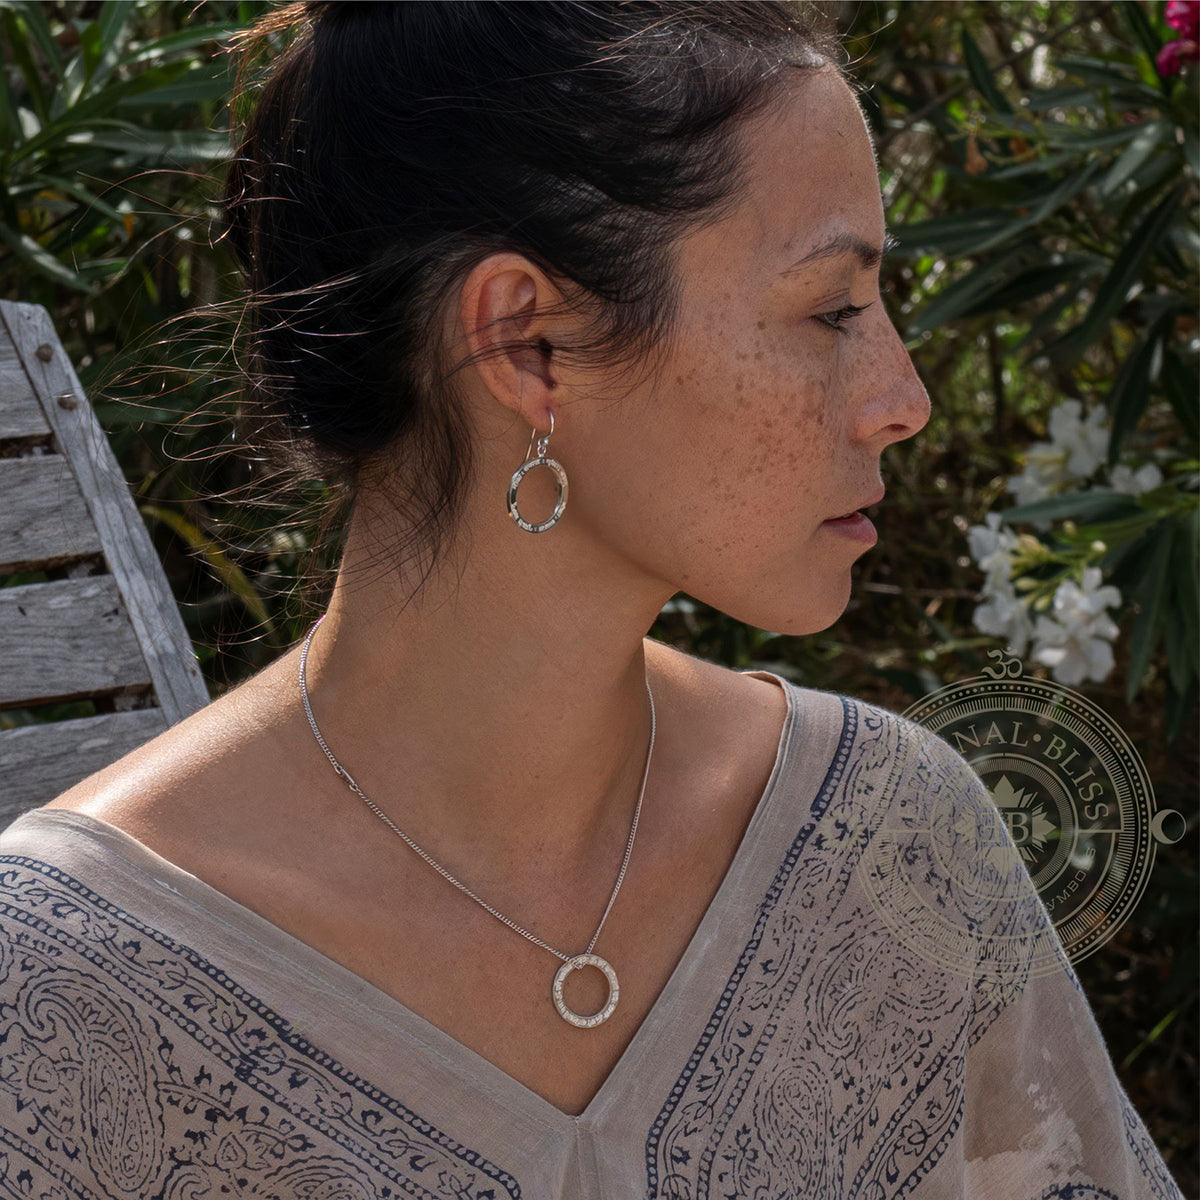 Spiritual Jewelry: The Lakshmi Mantra Jewelry Collection